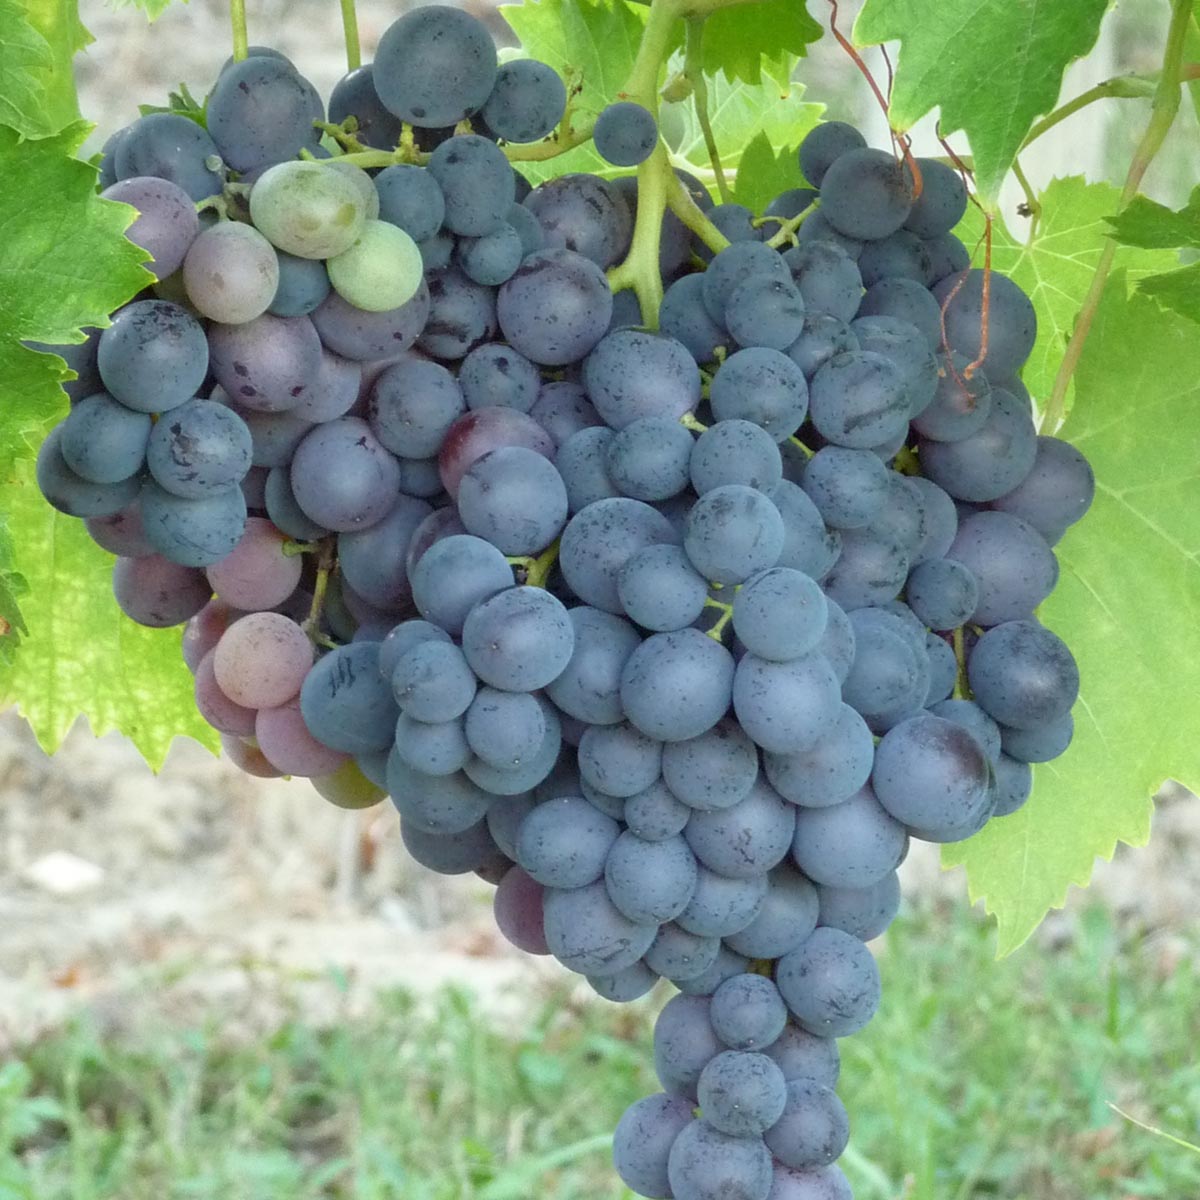 Vigne Muscat de Hambourg - Vitis vinifera